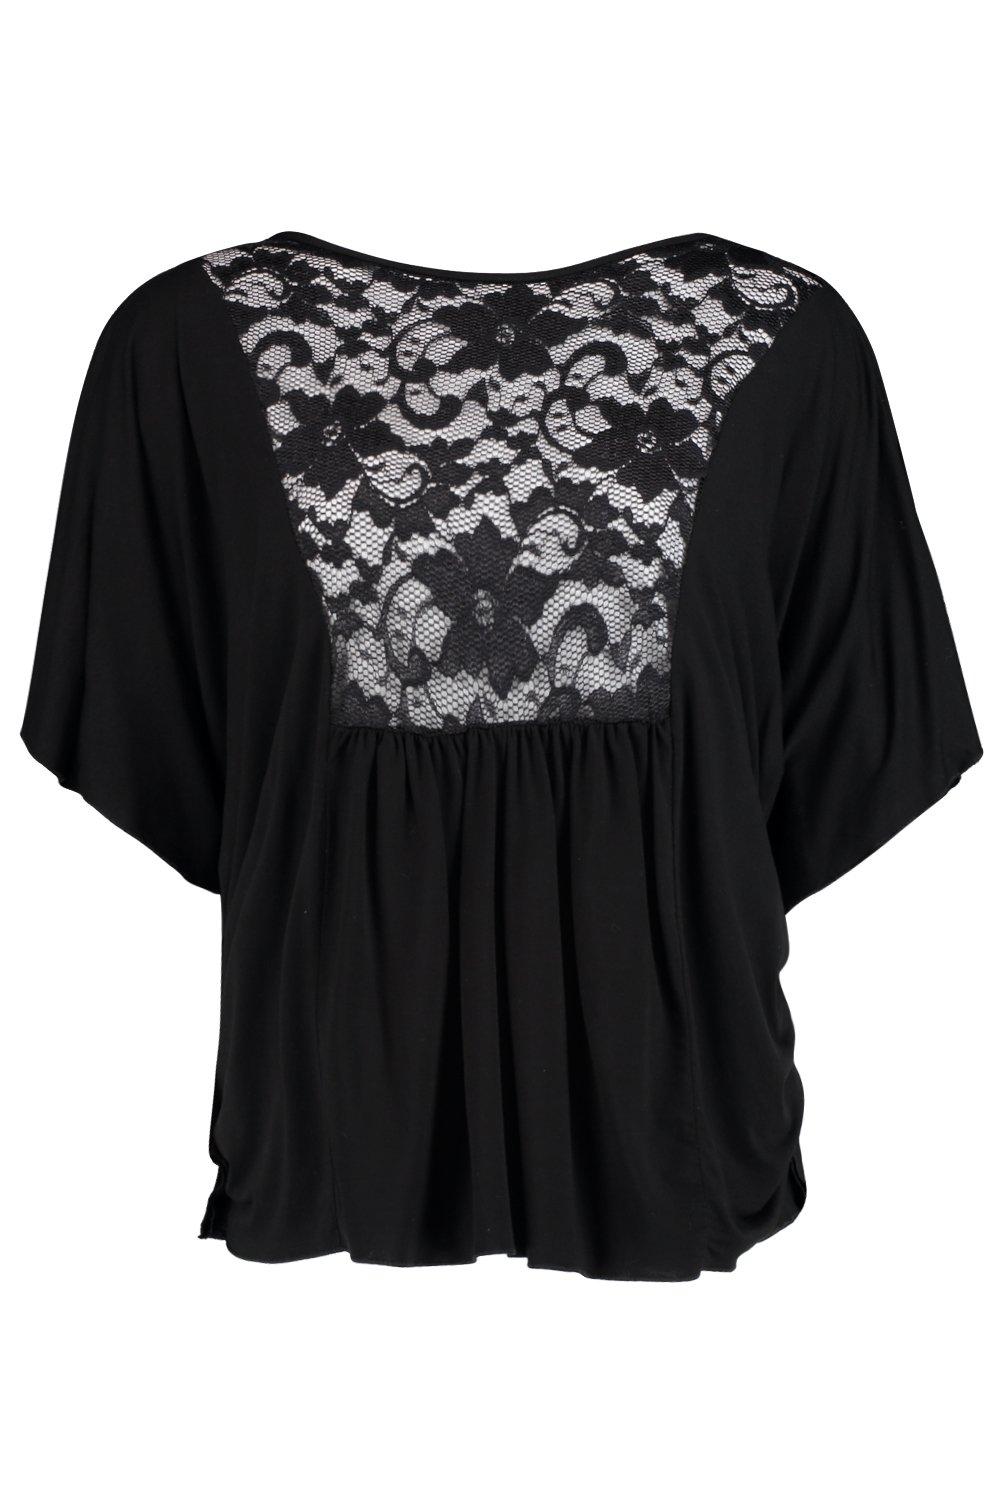 Boohoo Womens Niamh Angel Sleeve Lace Panel T-Shirt | eBay